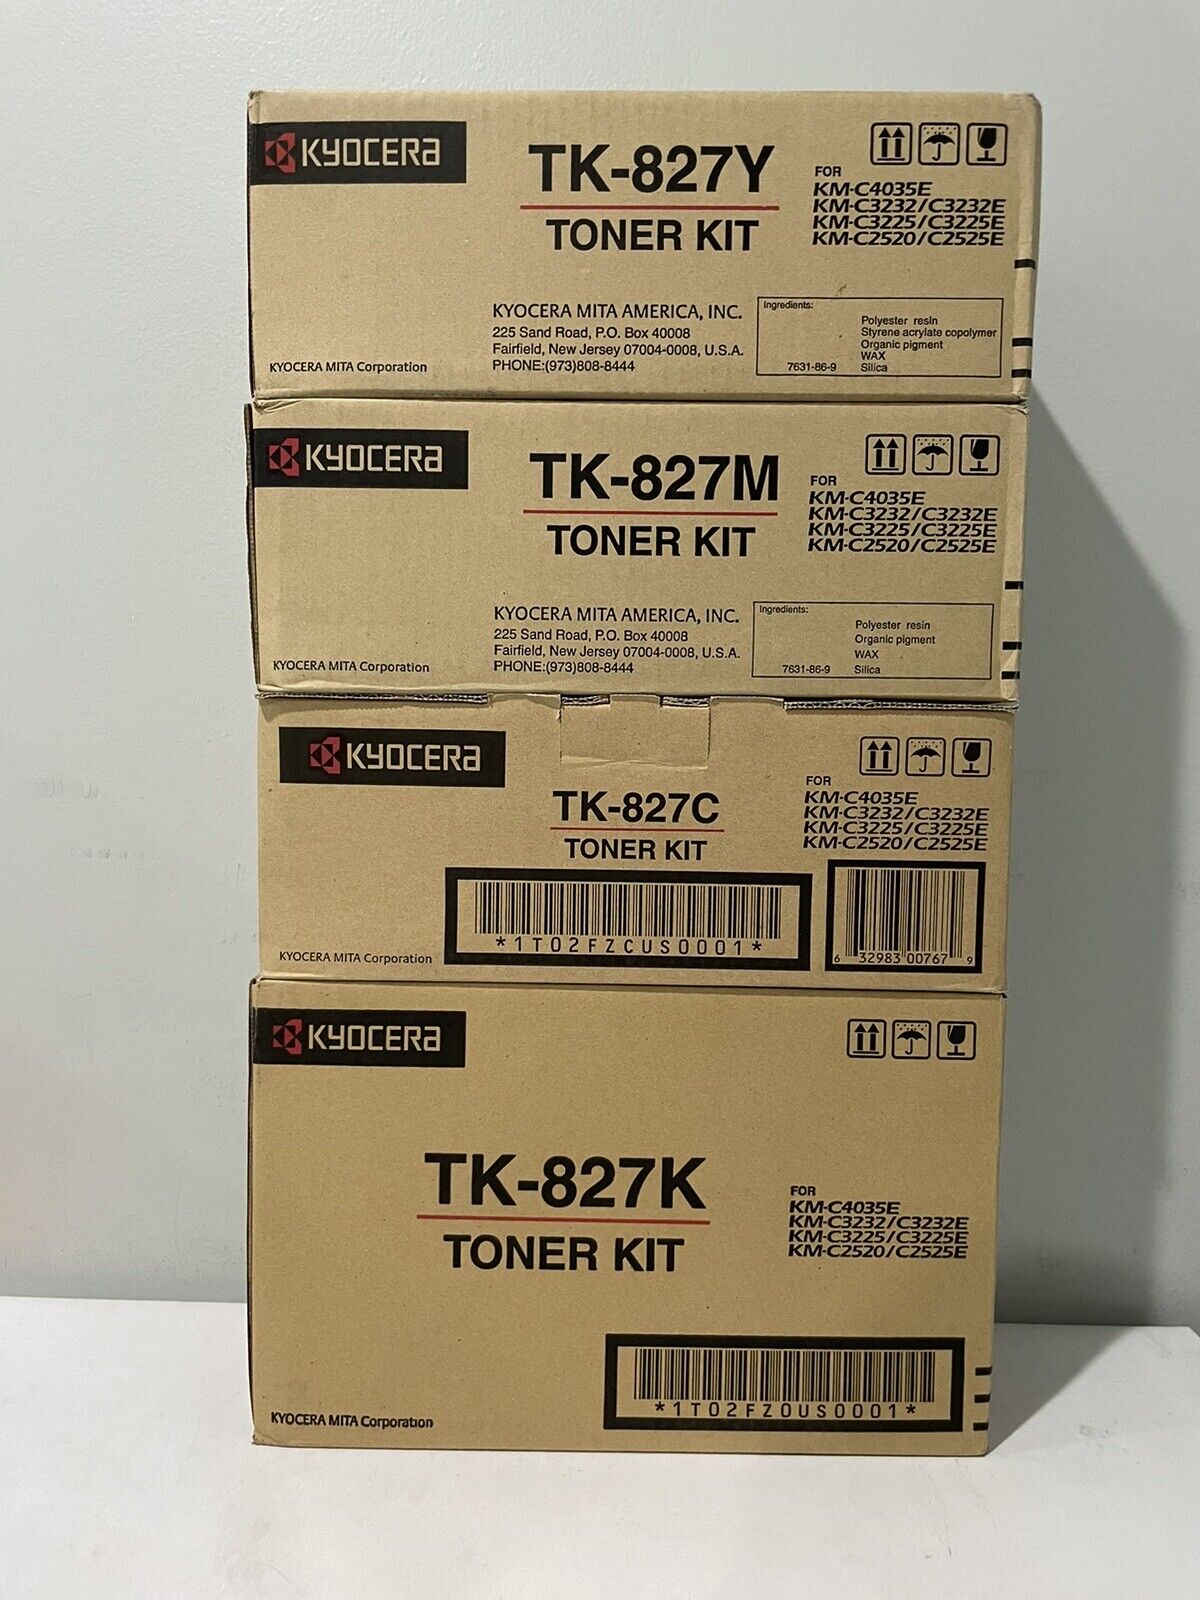 Kyocera TK-827 Toner Kit set of 4 KYCM for KM-C4035E KM-C3232 KM-C2520 New